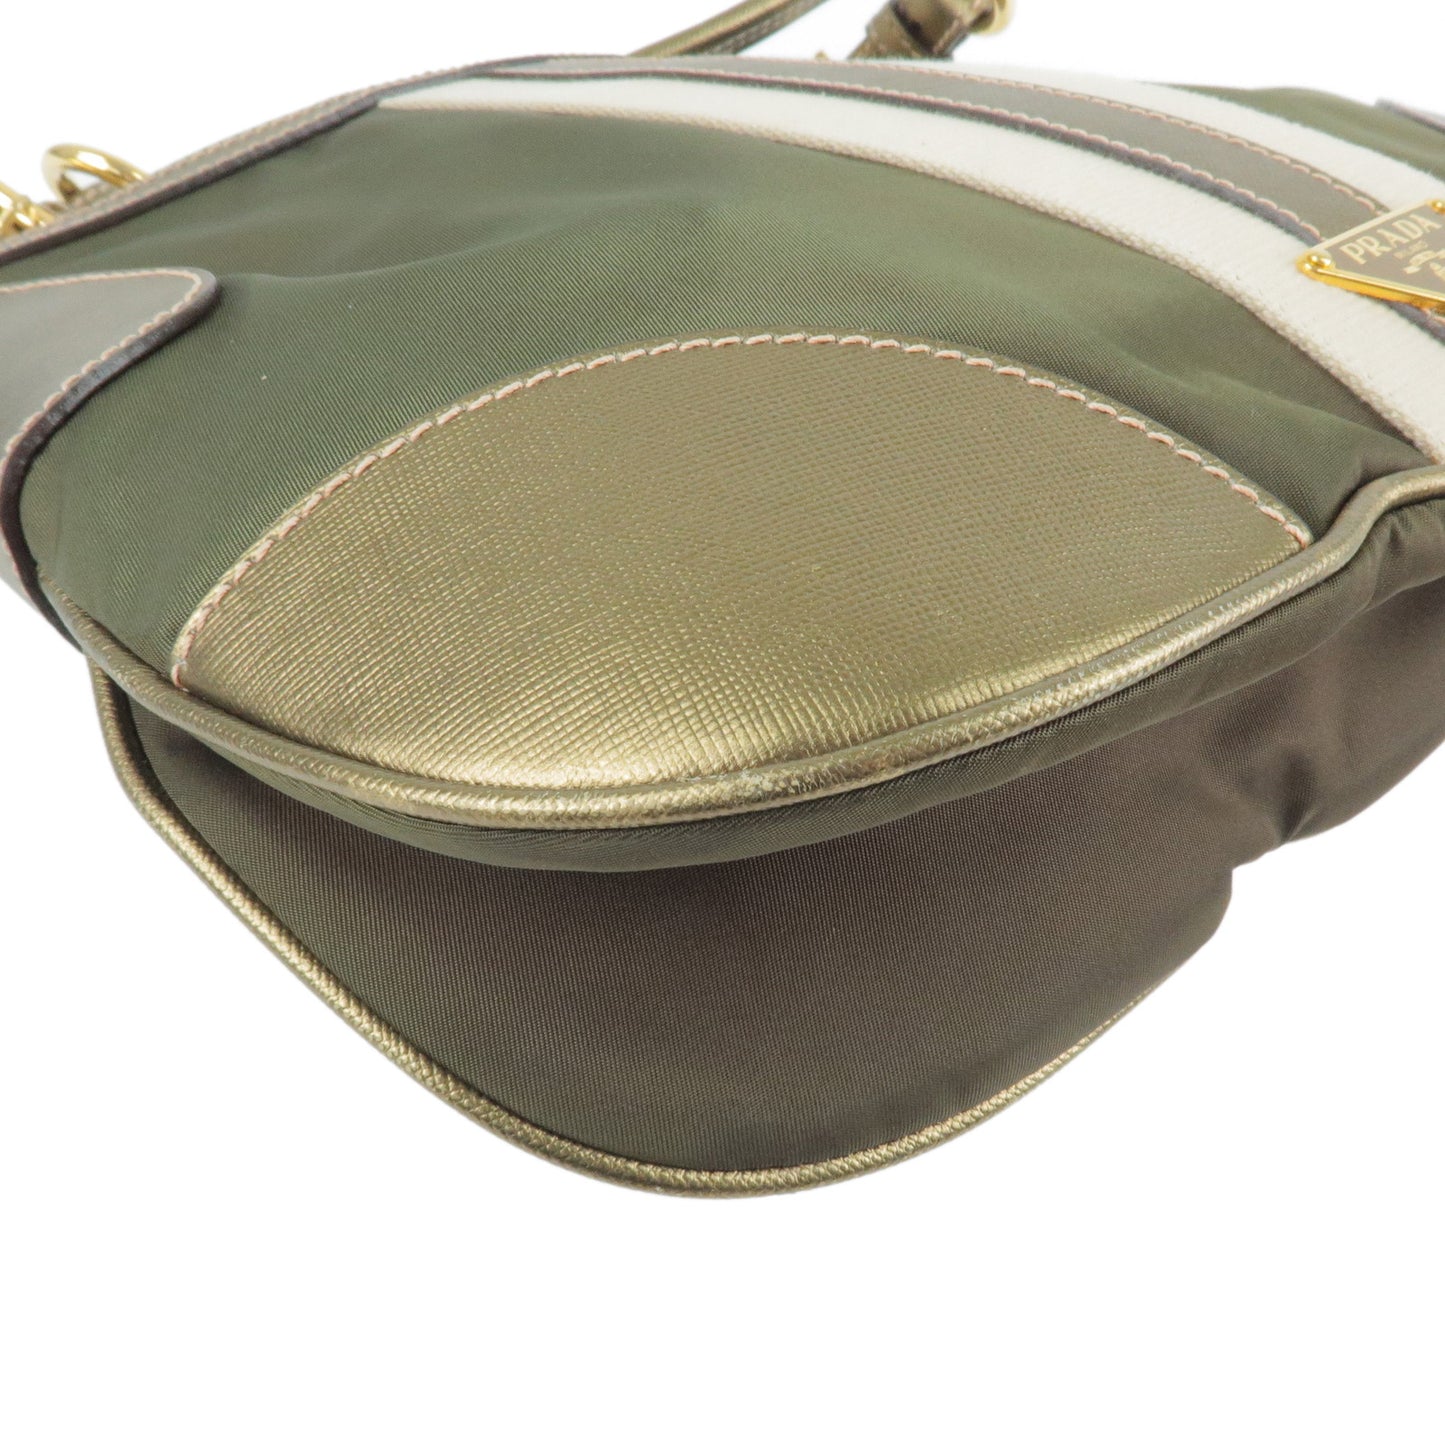 PRADA Logo Nylon Leather Shoulder Bag Khaki Bronze BR4257